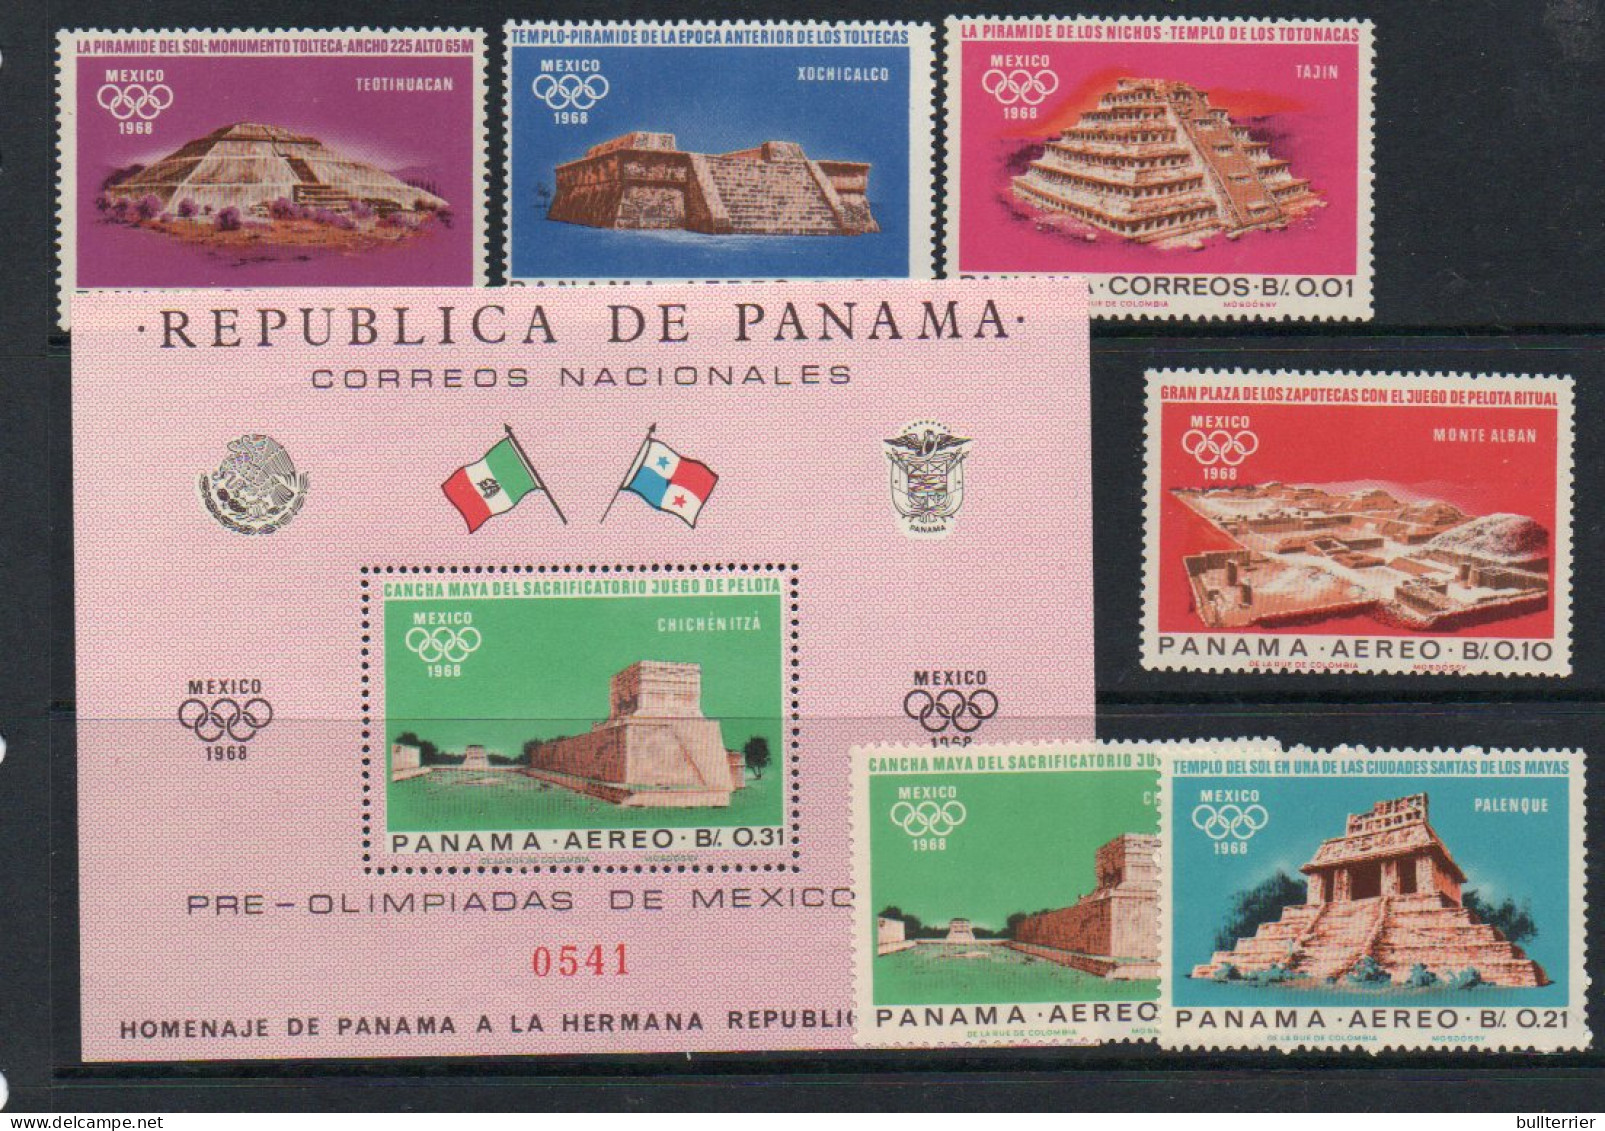 PANAMA - 1968 - PRE MEXICO OLYMPICS SET OF 8 + SOUVENIR SHEET MINT NEVER HINGED  - Panama